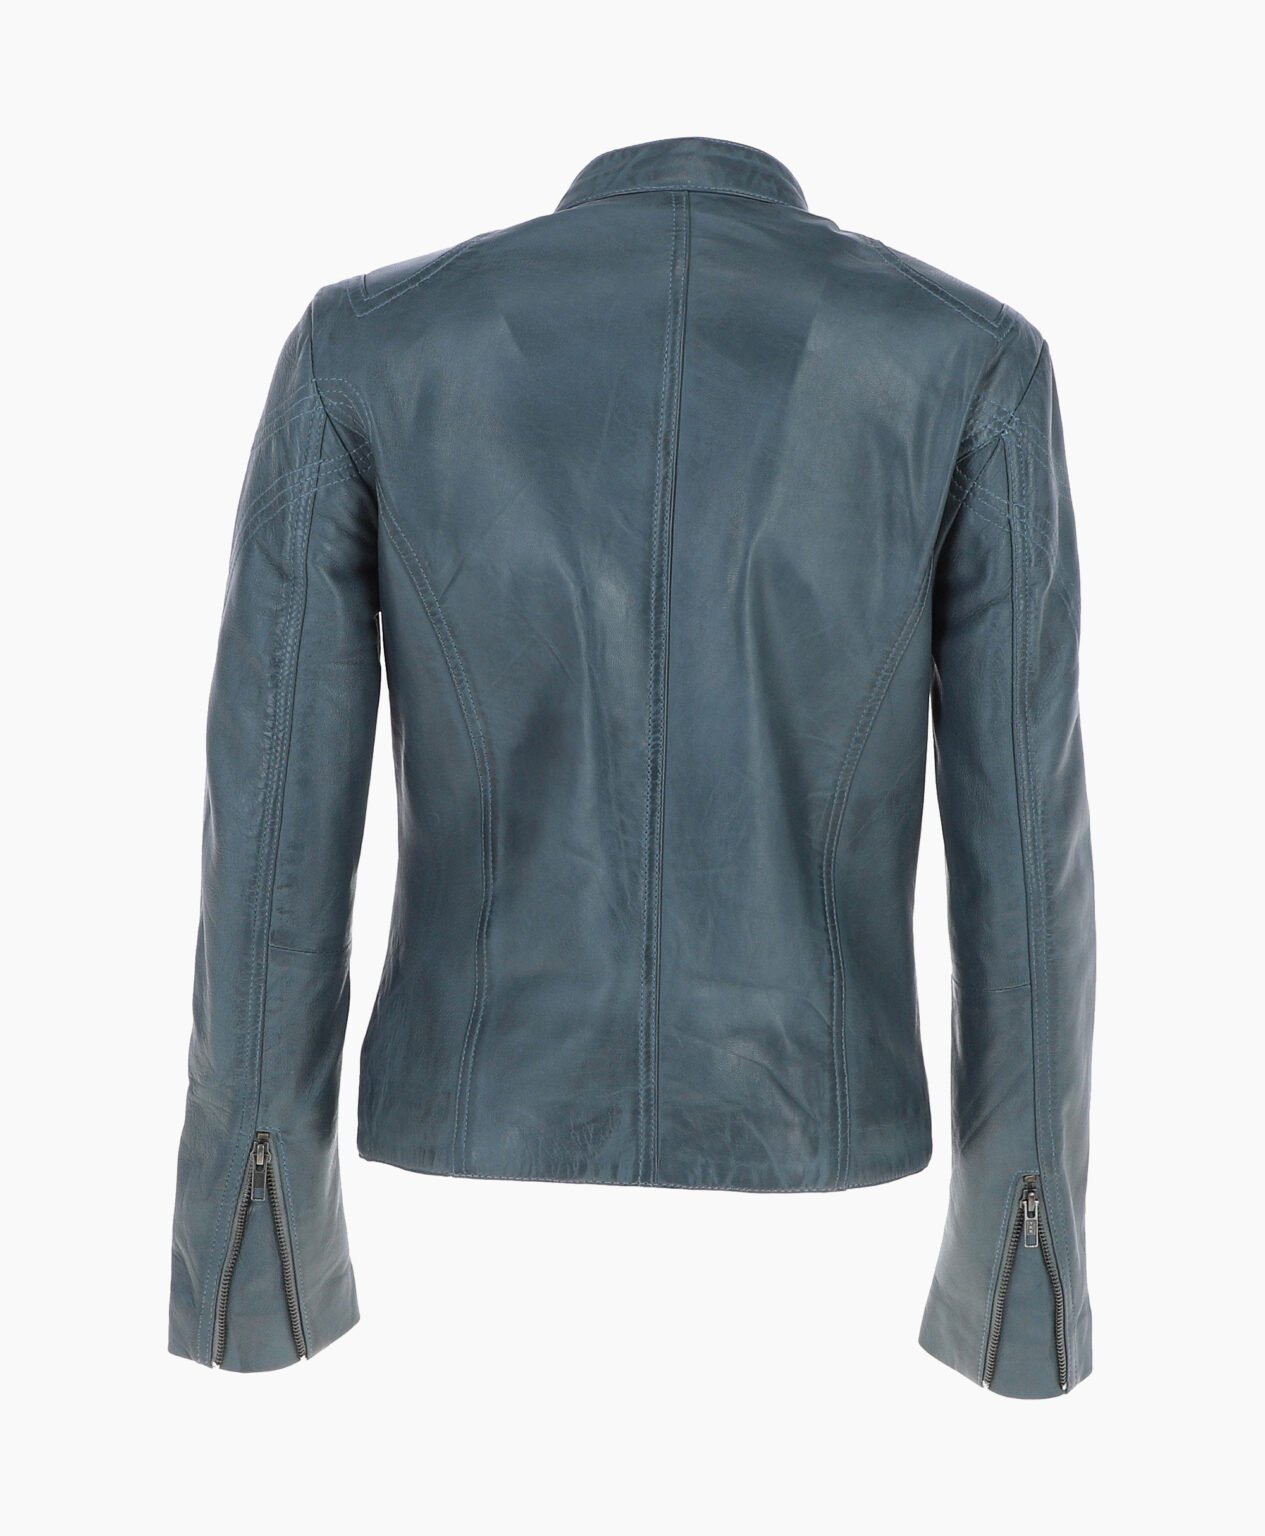 vogue-jacket-leather-biker-jacket-gray-alton-image202